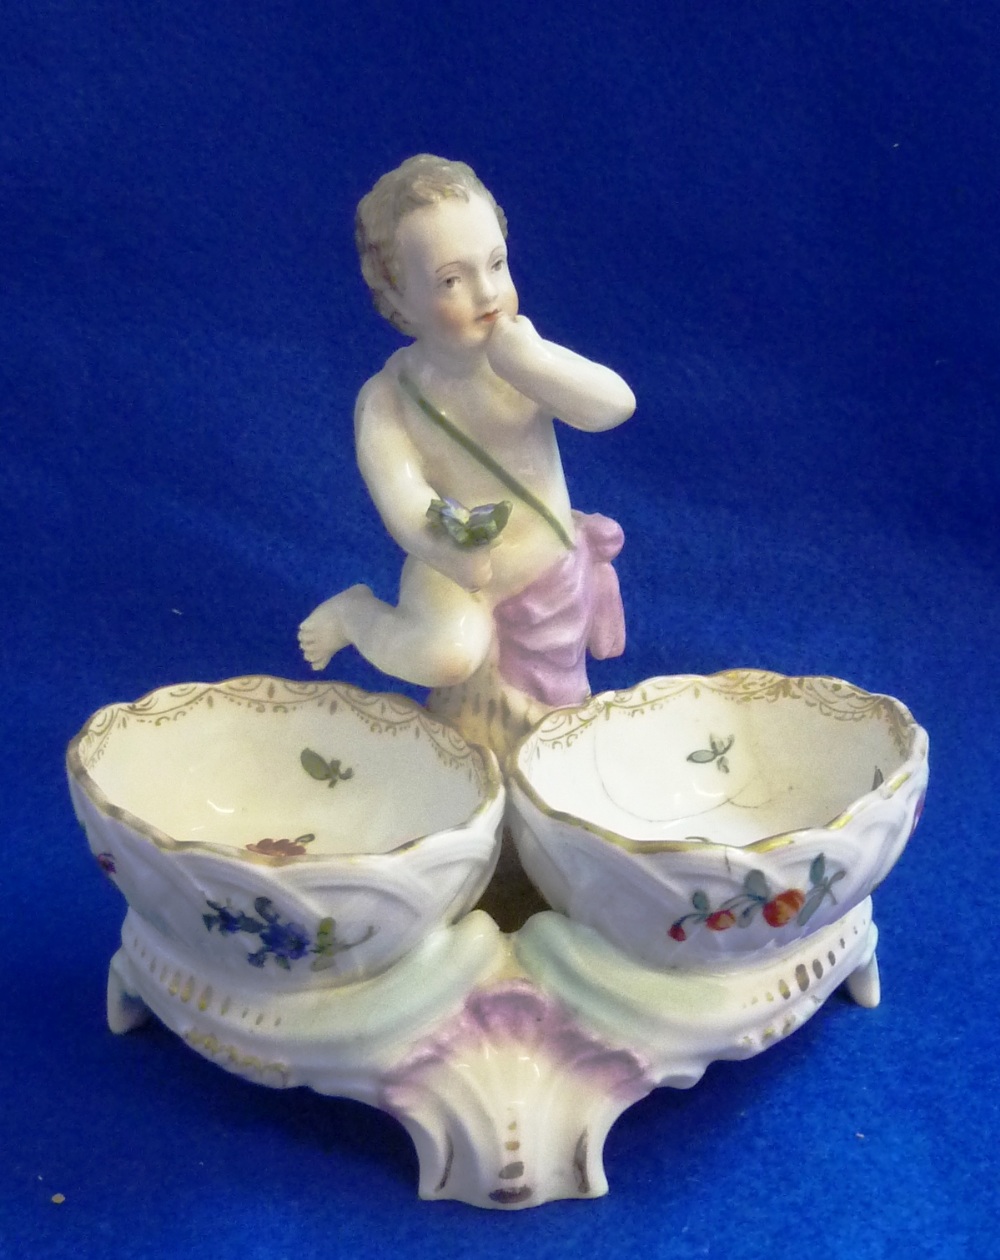 A 19th Century Continental porcelain (probably Meissen) two division Table Salt, cherubic figure